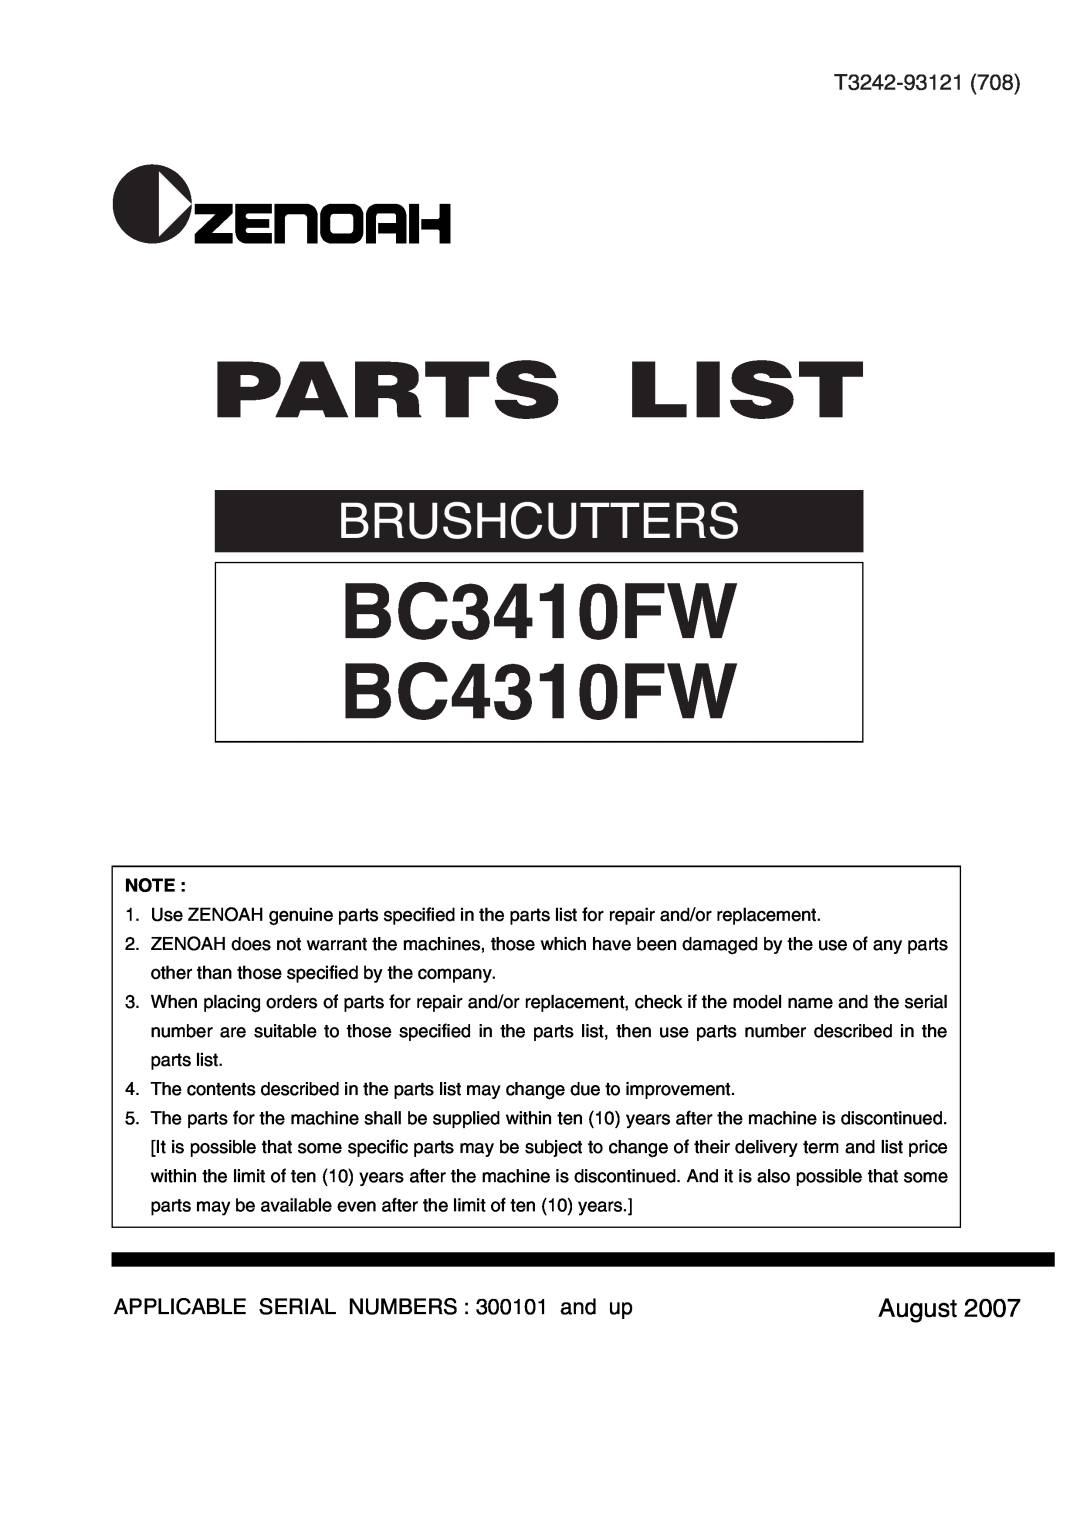 Zenoah manual Parts List, BC3410FW BC4310FW, Brushcutters, August, T3242-93121708 